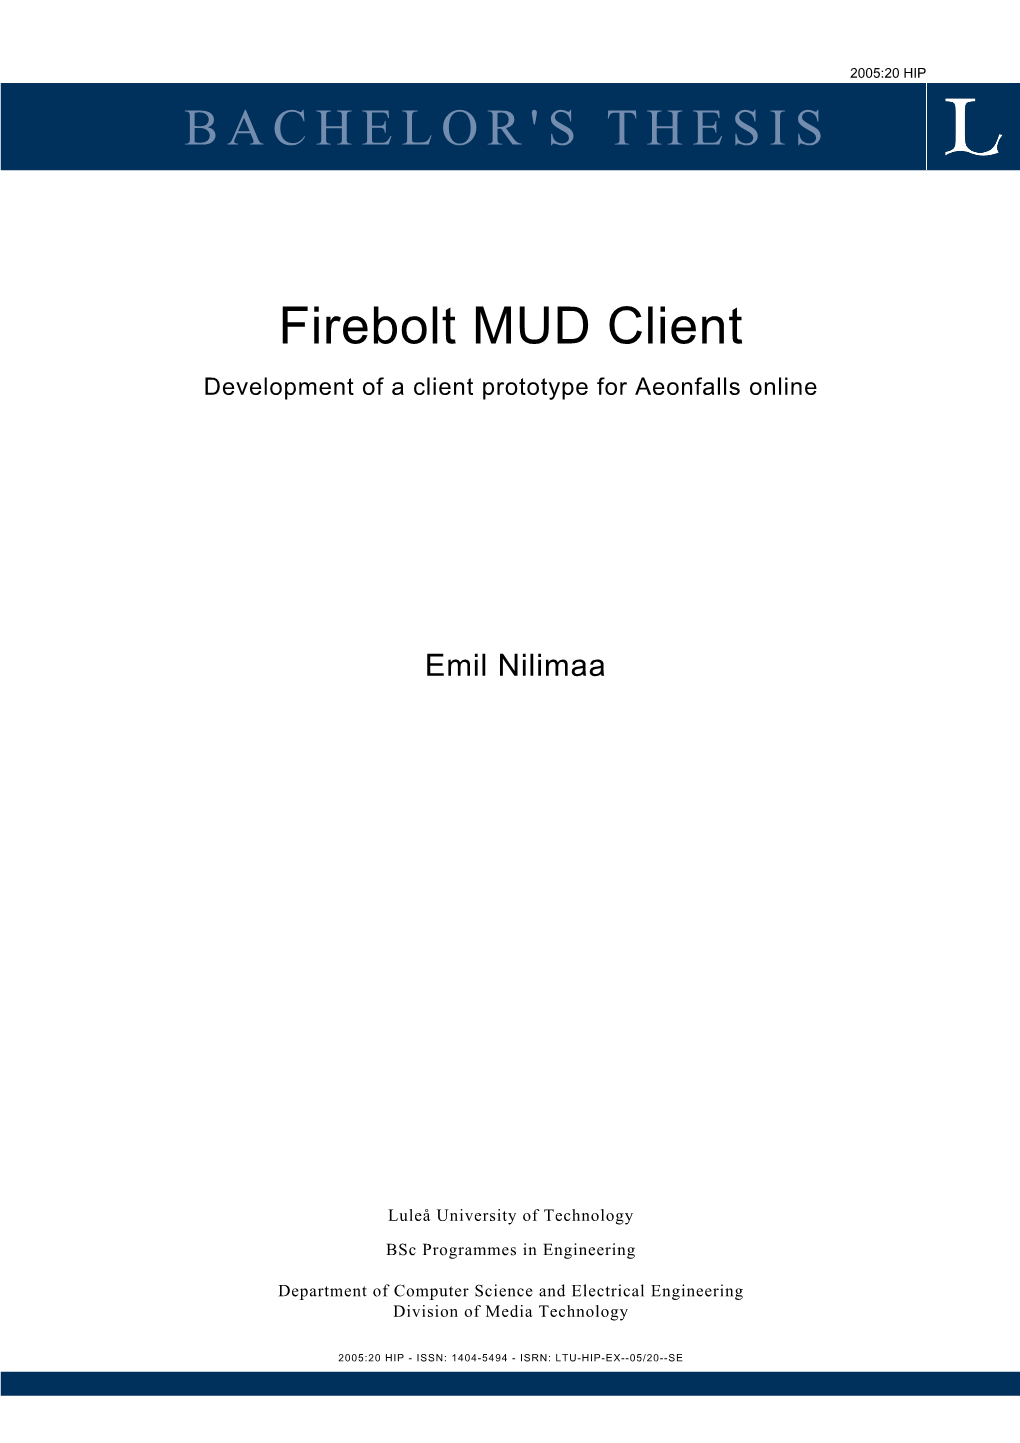 Firebolt MUD Client Development of a Client Prototype for Aeonfalls Online